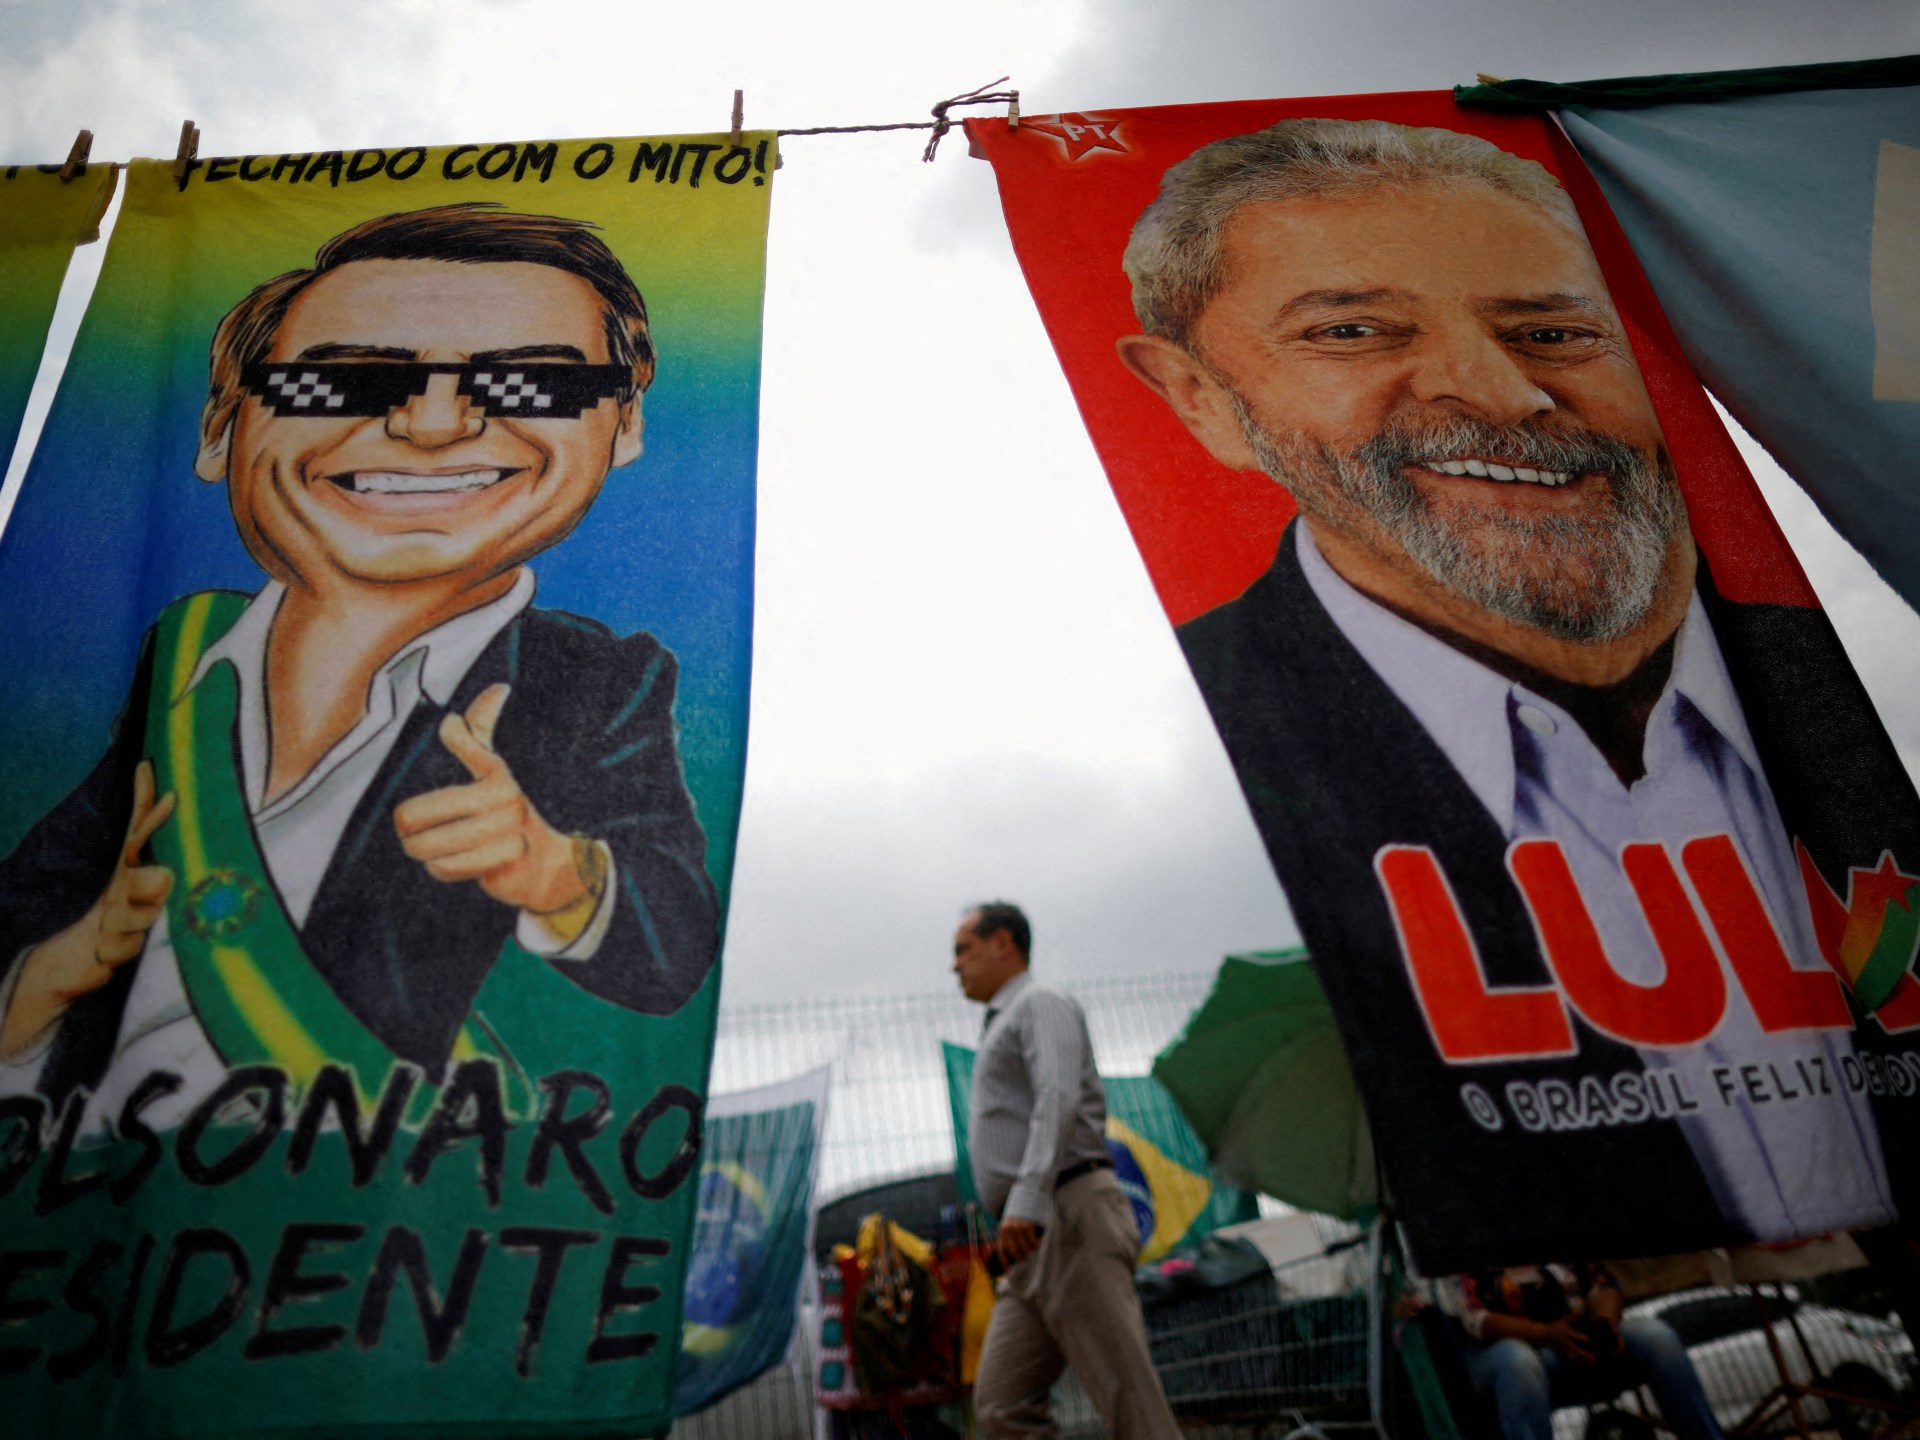 Brazil’s Lula says he hopes Bolsonaro will accept election result